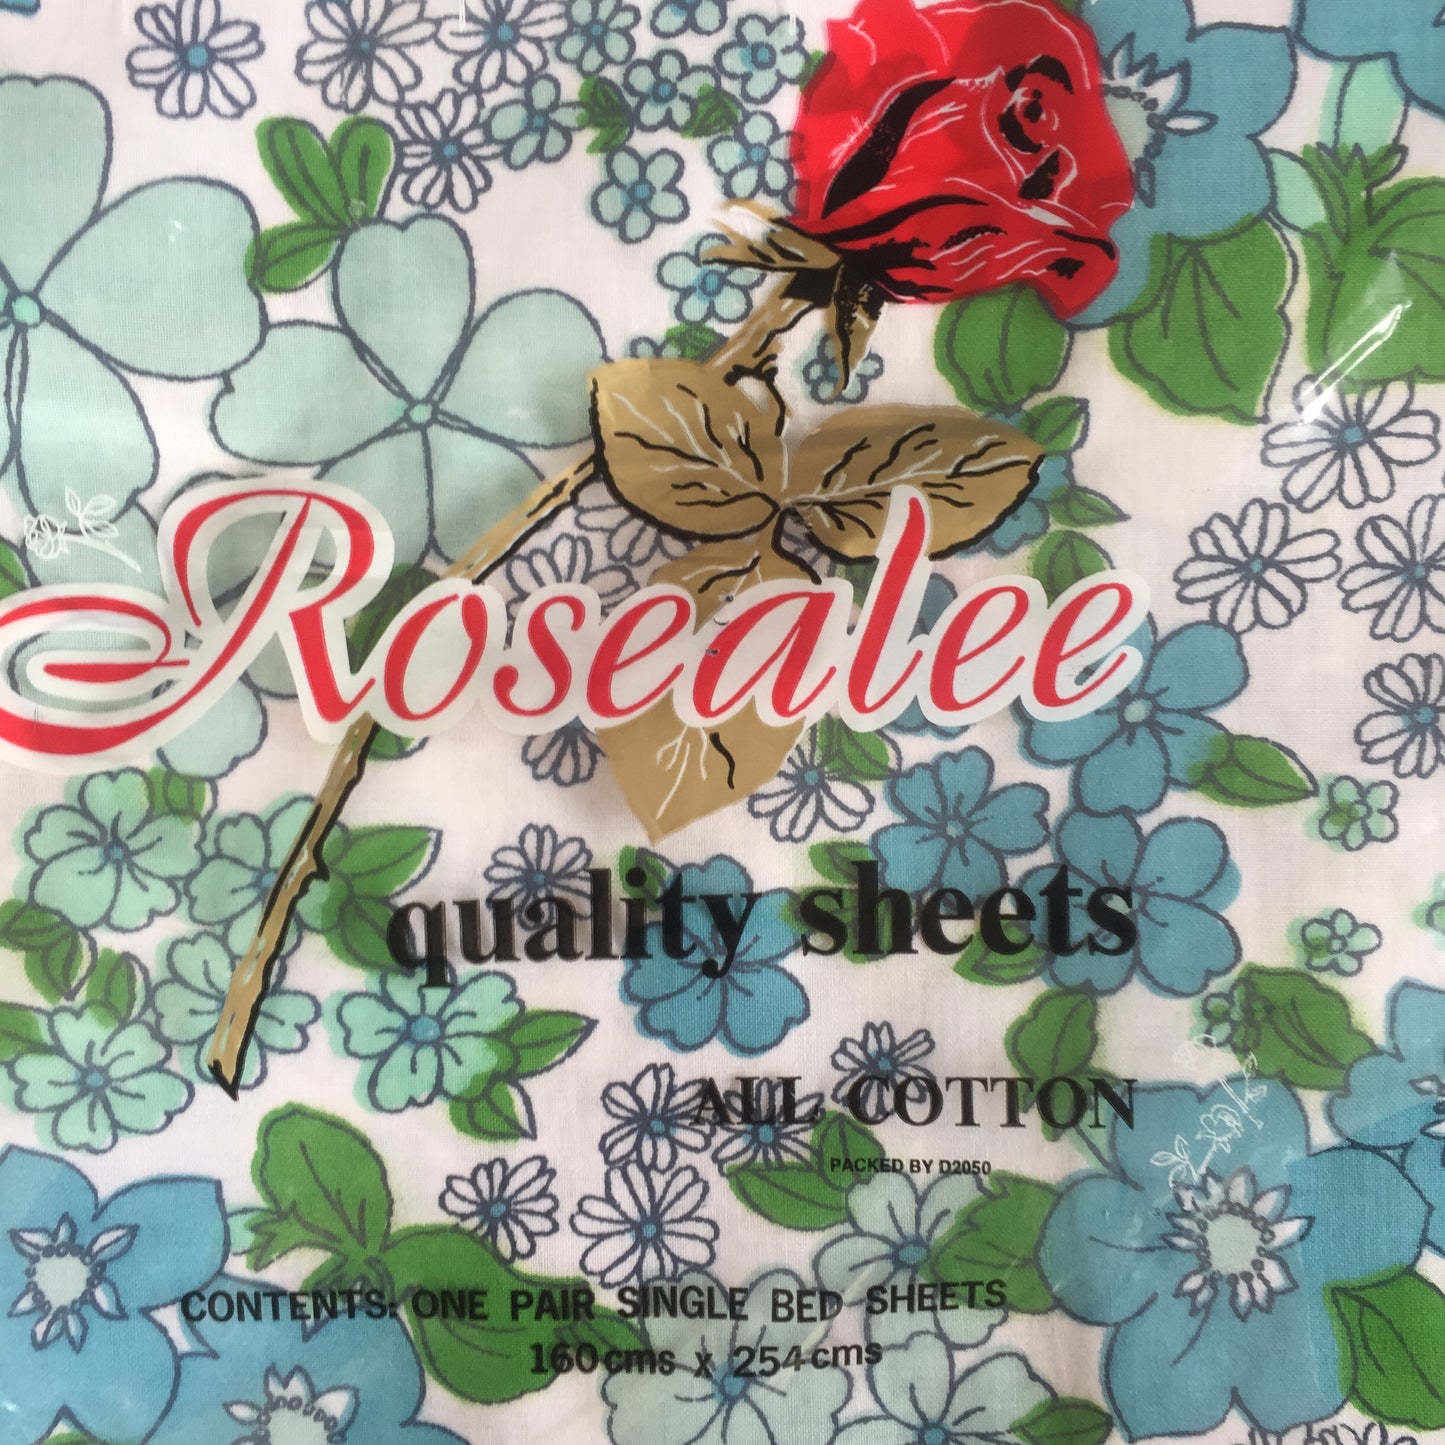 UNUSED Retro Vintage Cotton Blue Floral Sheet STUNNING x 1